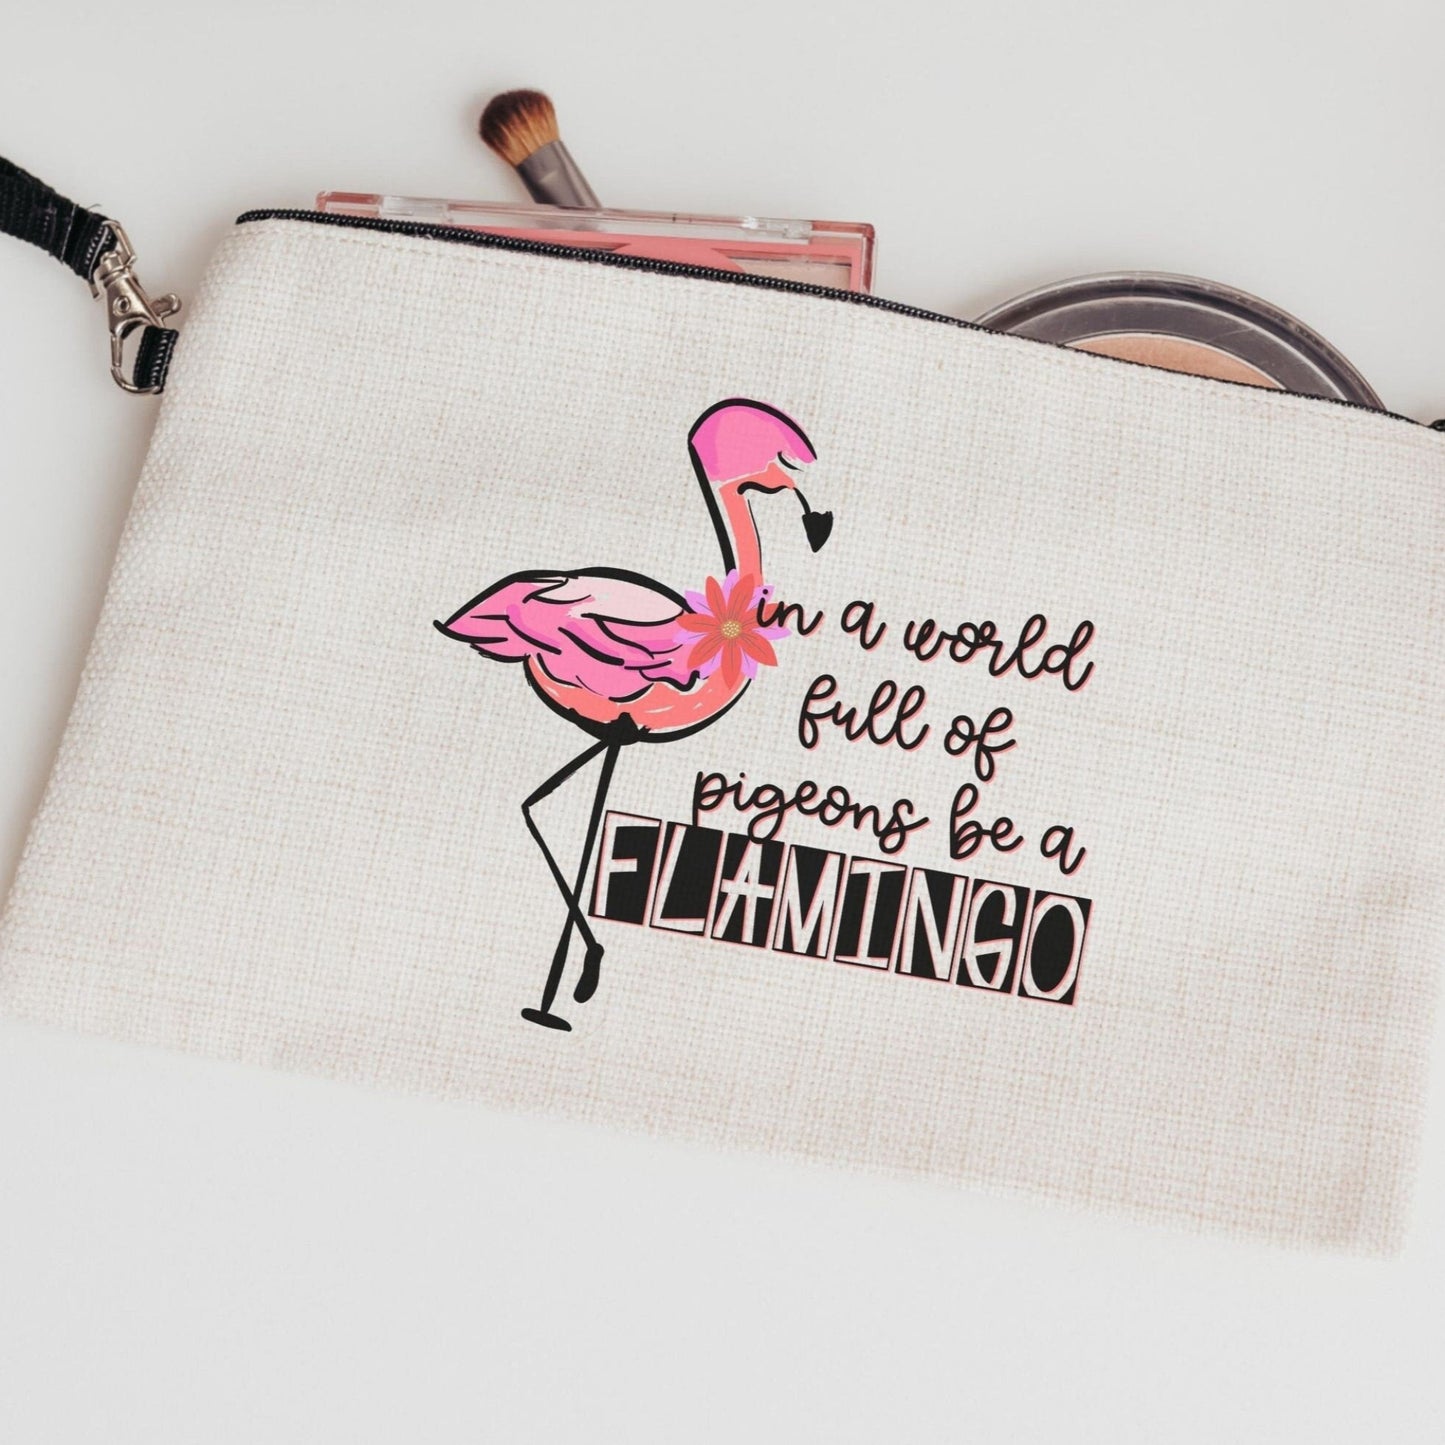 Fashionable Cosmetic Bag with Flamingo Design